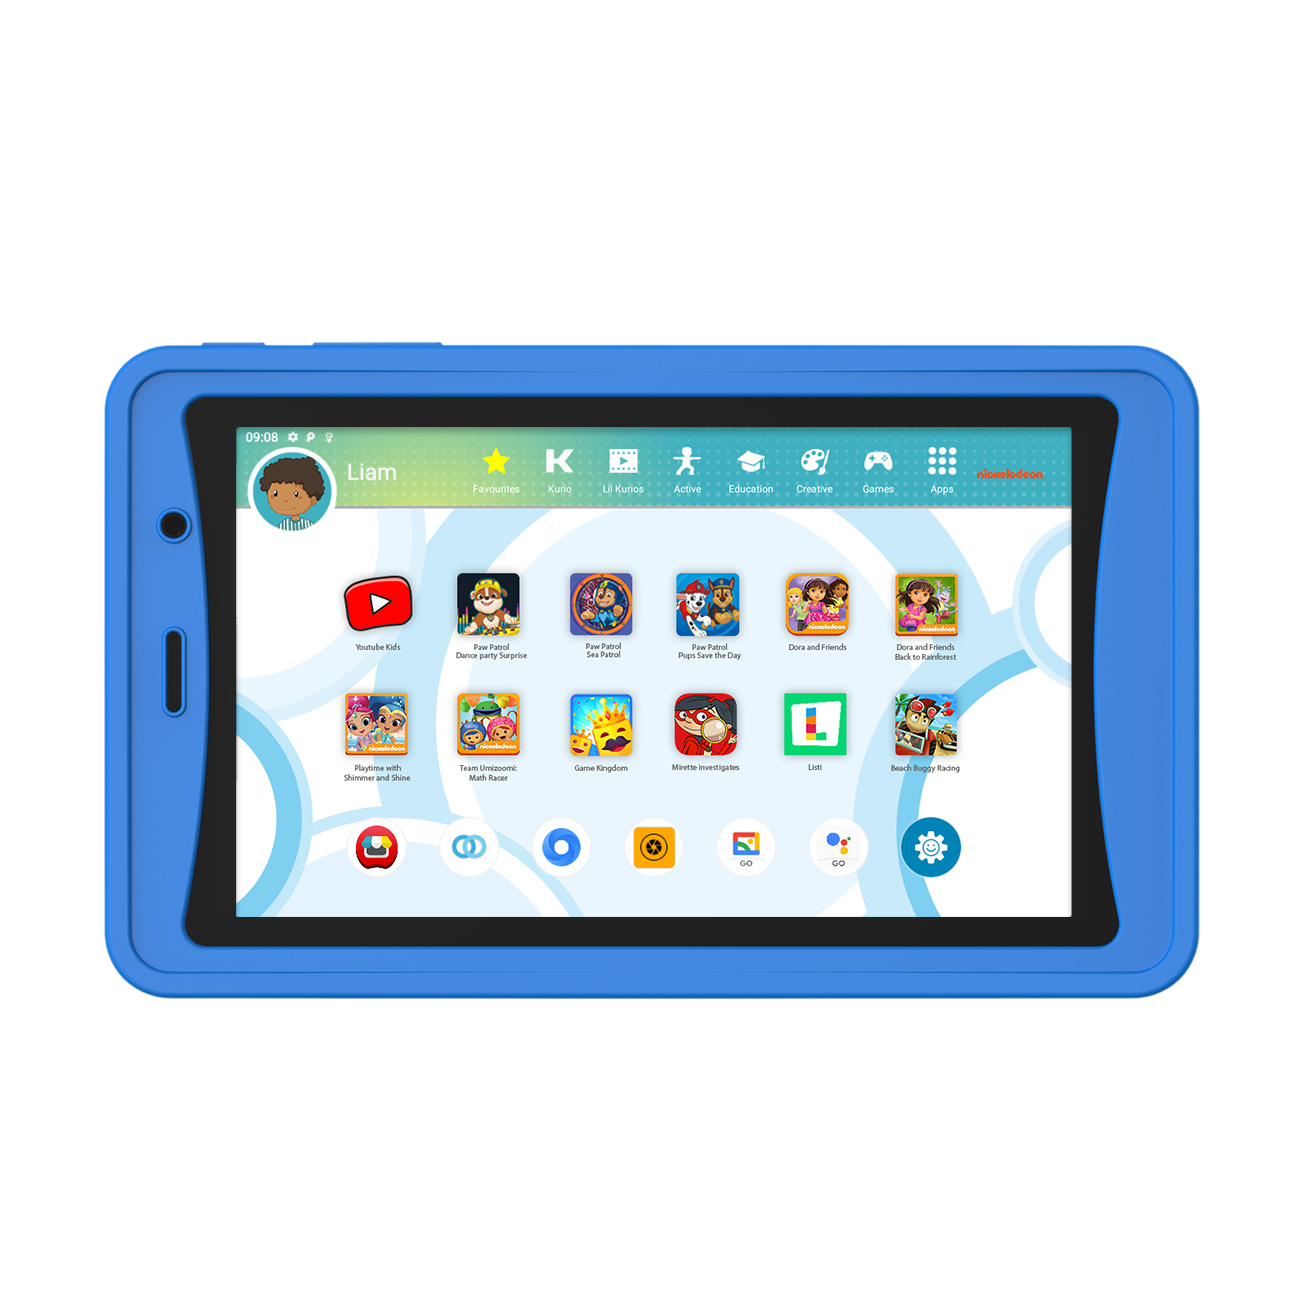 Tablet per bambini Kurio Tab Ultra 2 - Nickelodeon Blue Blu [C21174]